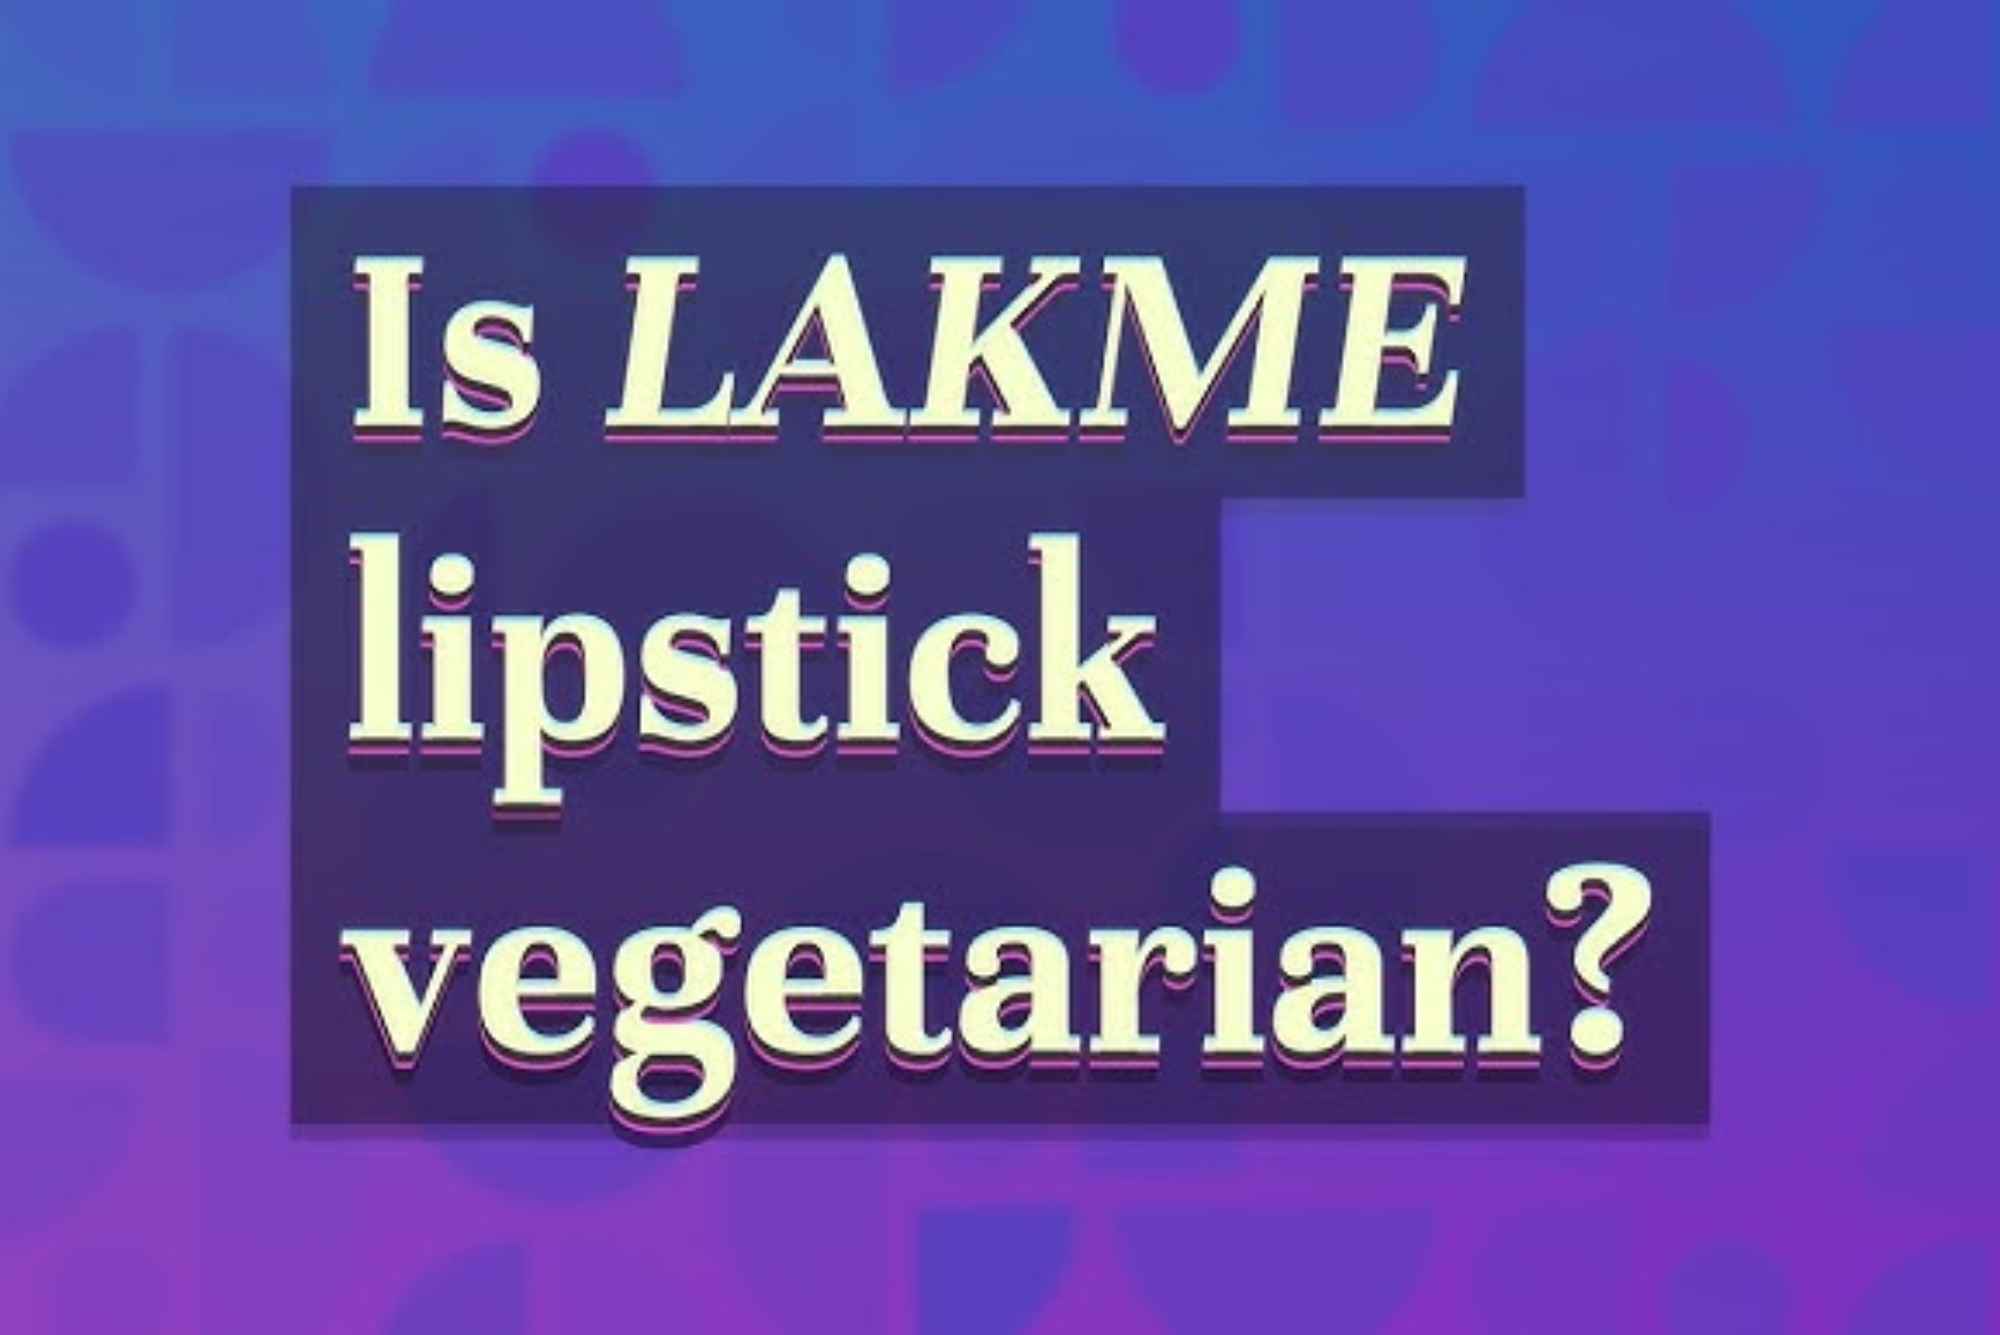 Is Lakme Lipstick Vegetarian